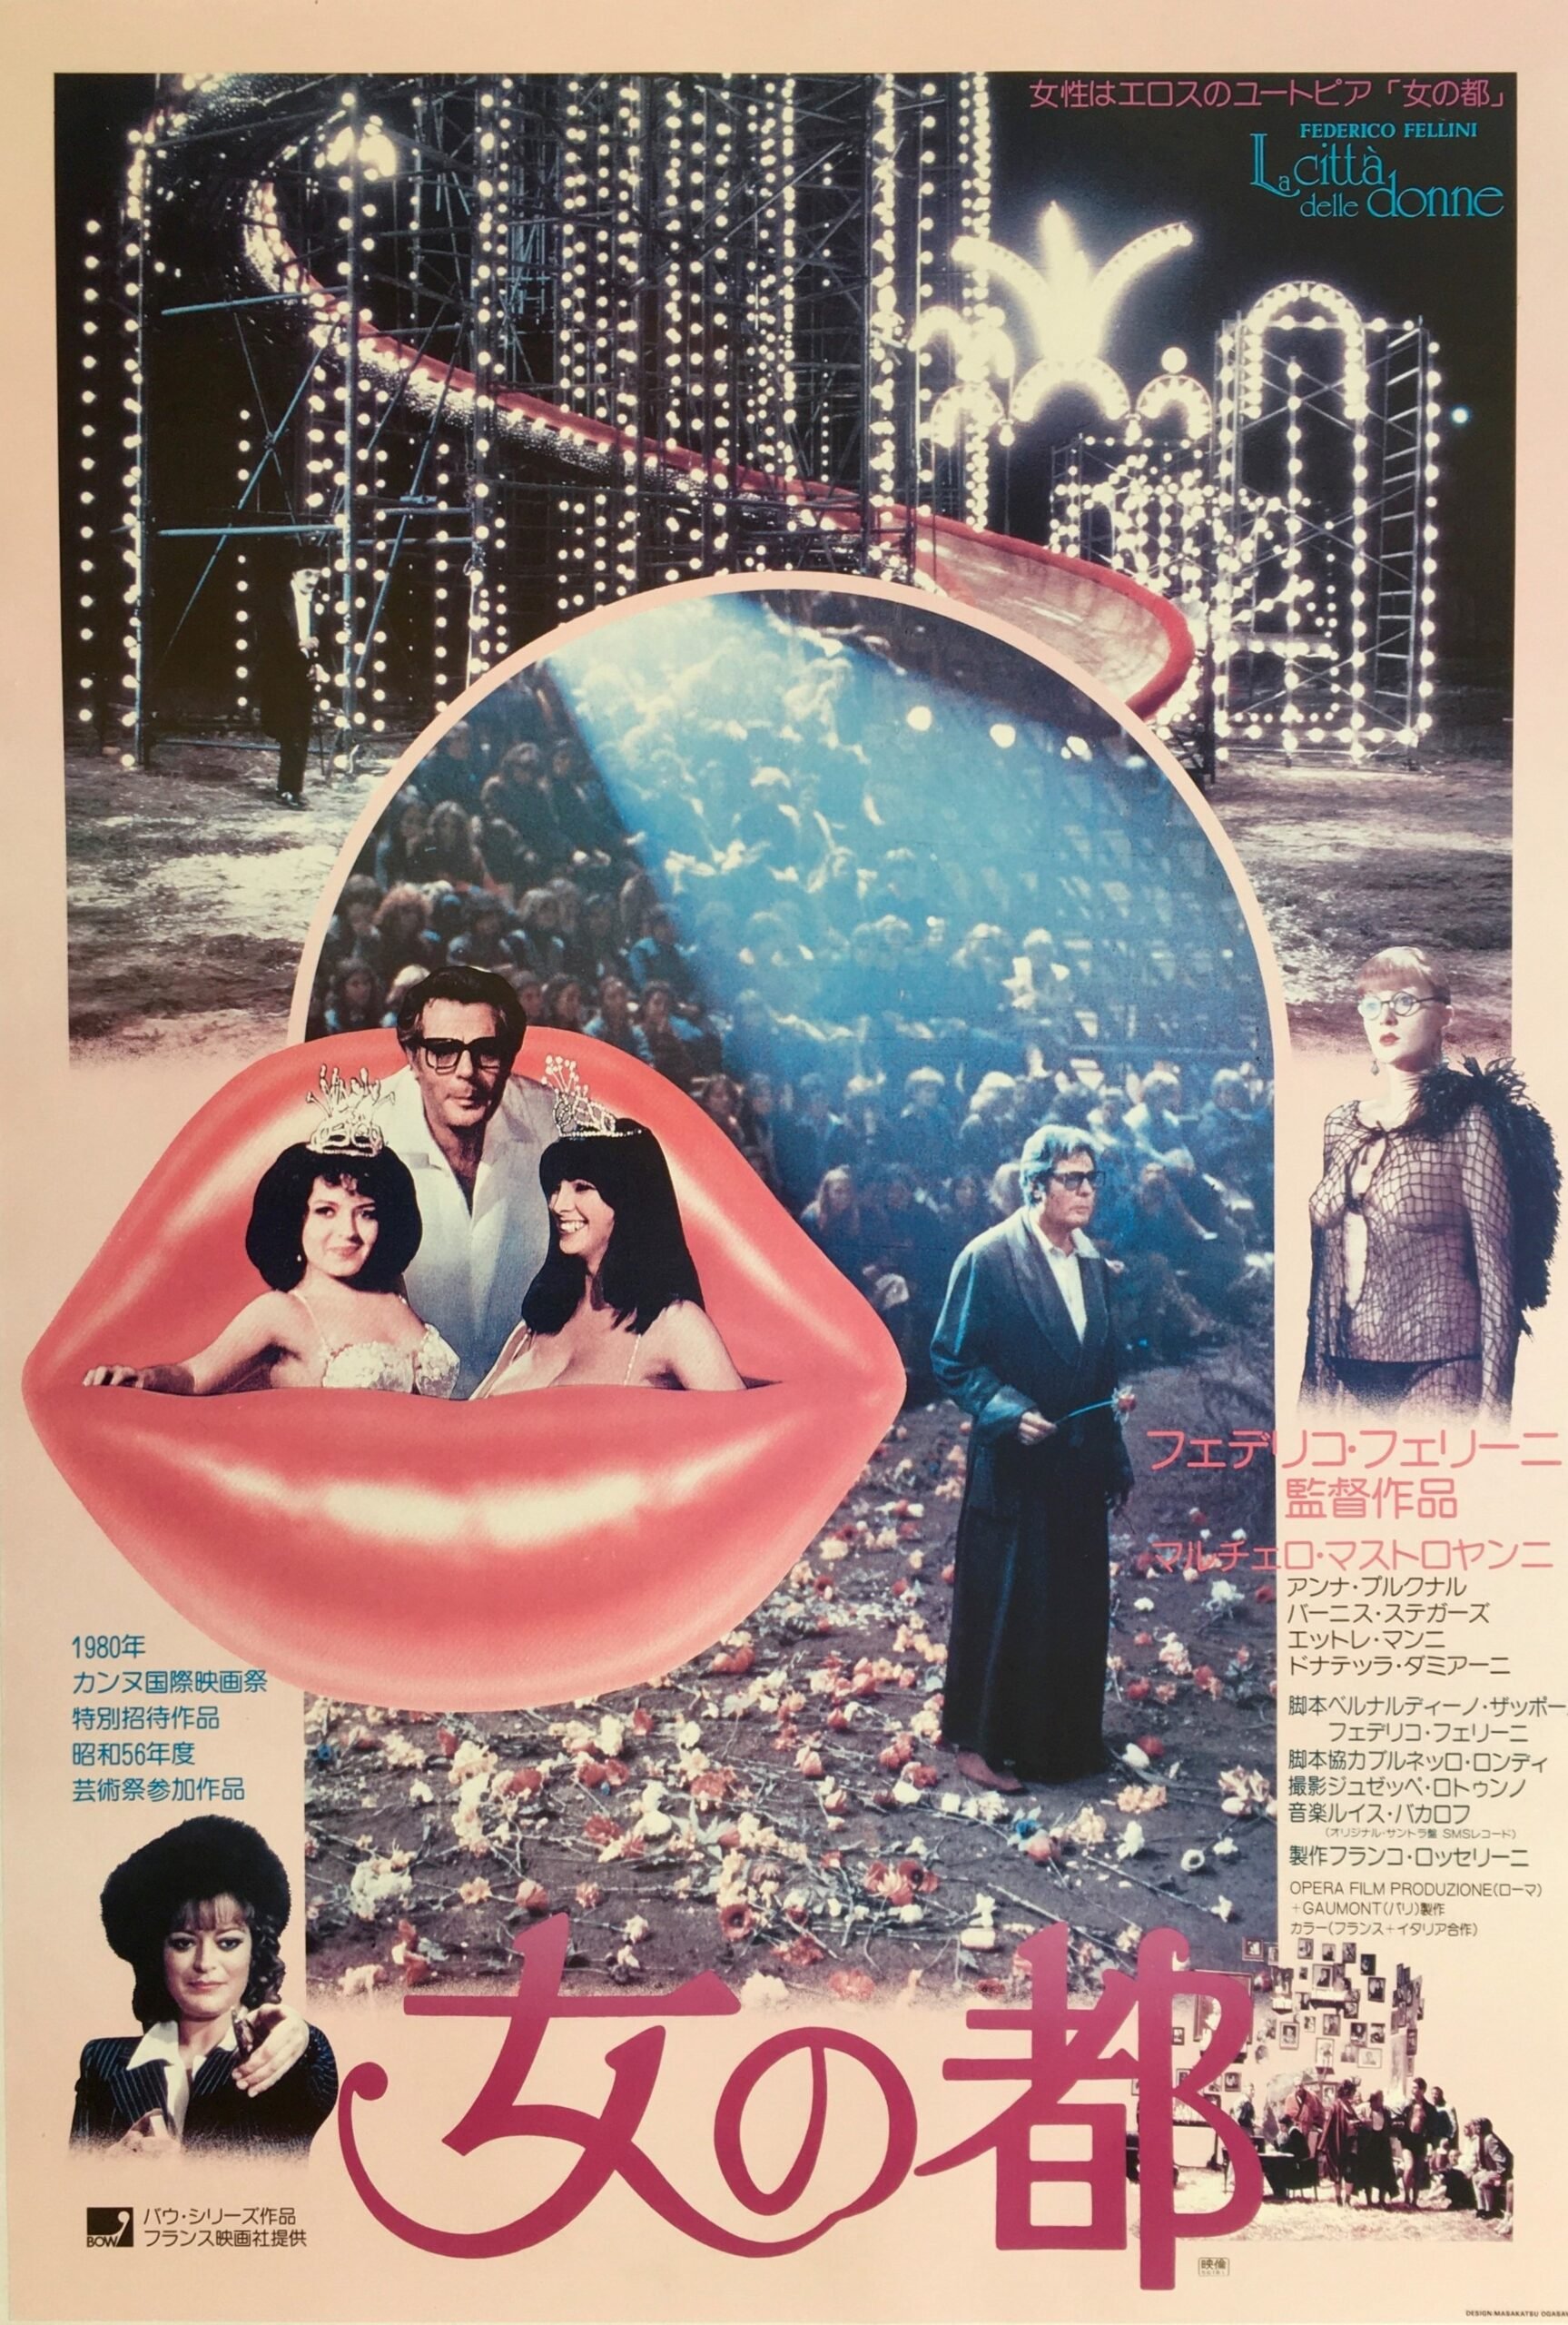 Original vintage cinema movie poster for Fellini comedy drama, City of Women